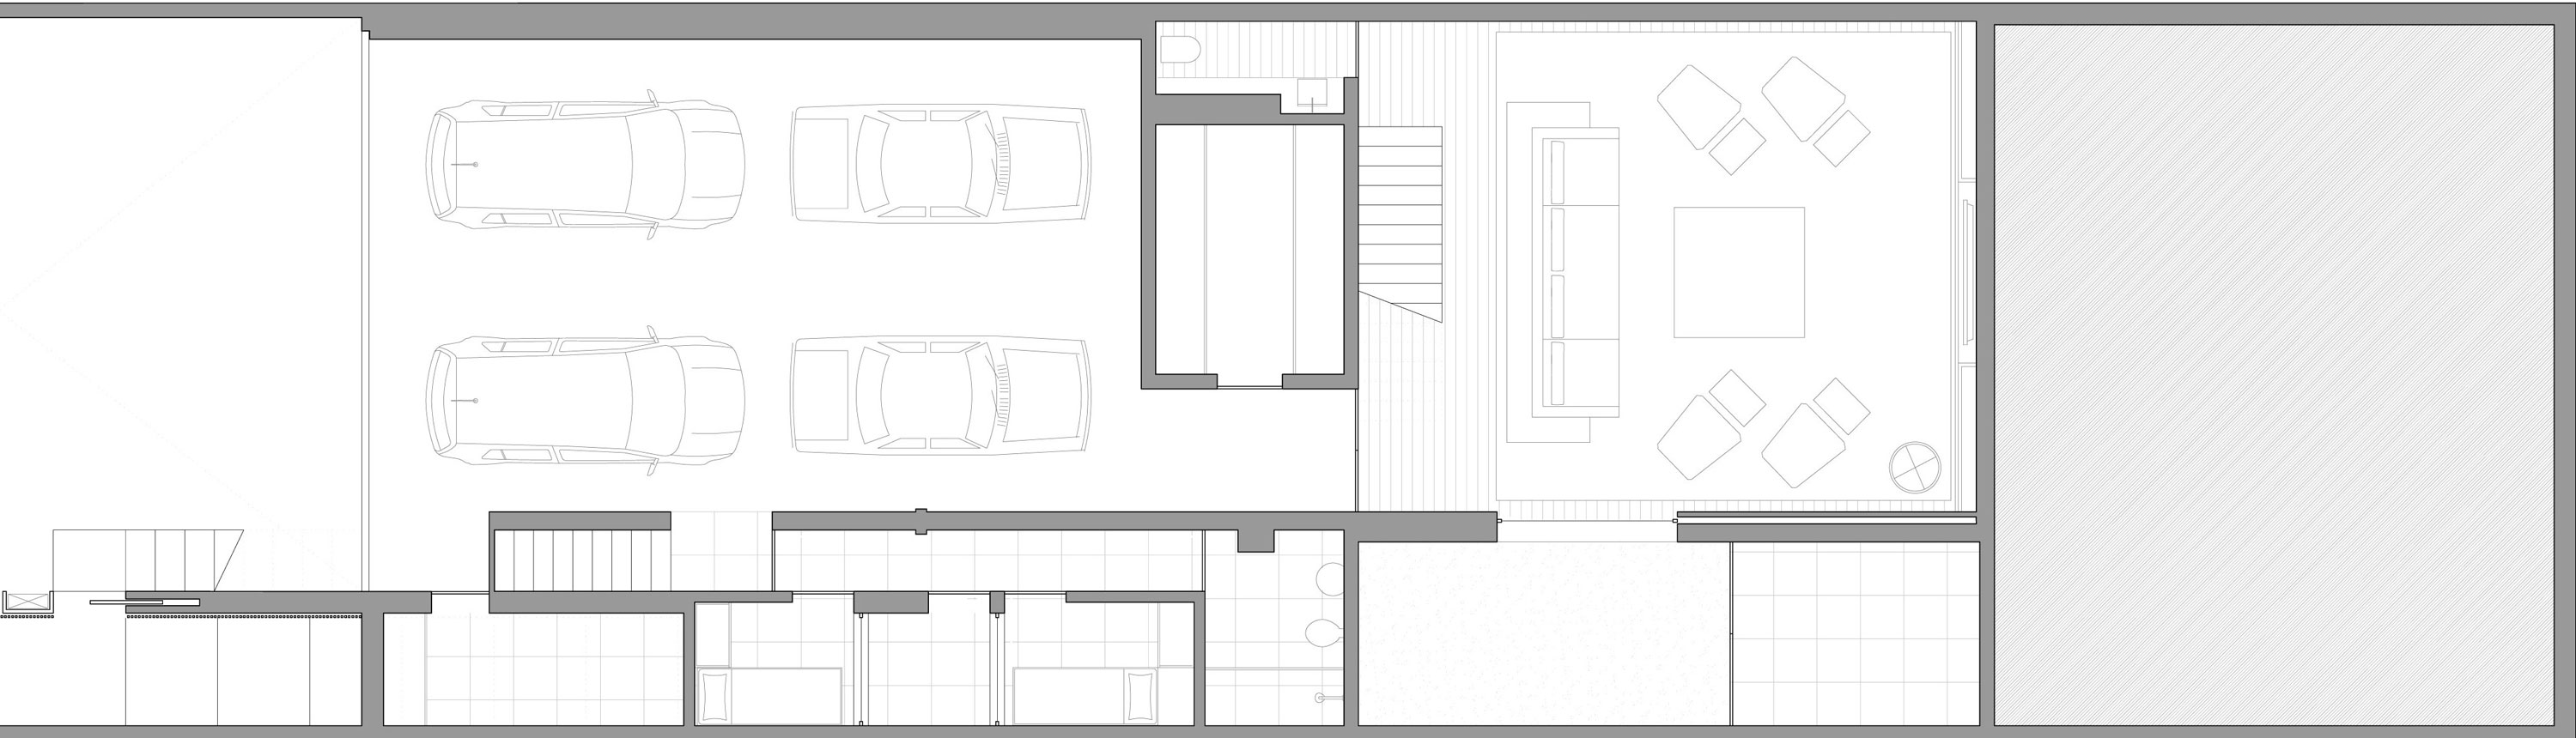 Ground Floor Plan, Sophisticated Family Home in São Paulo, Brazil